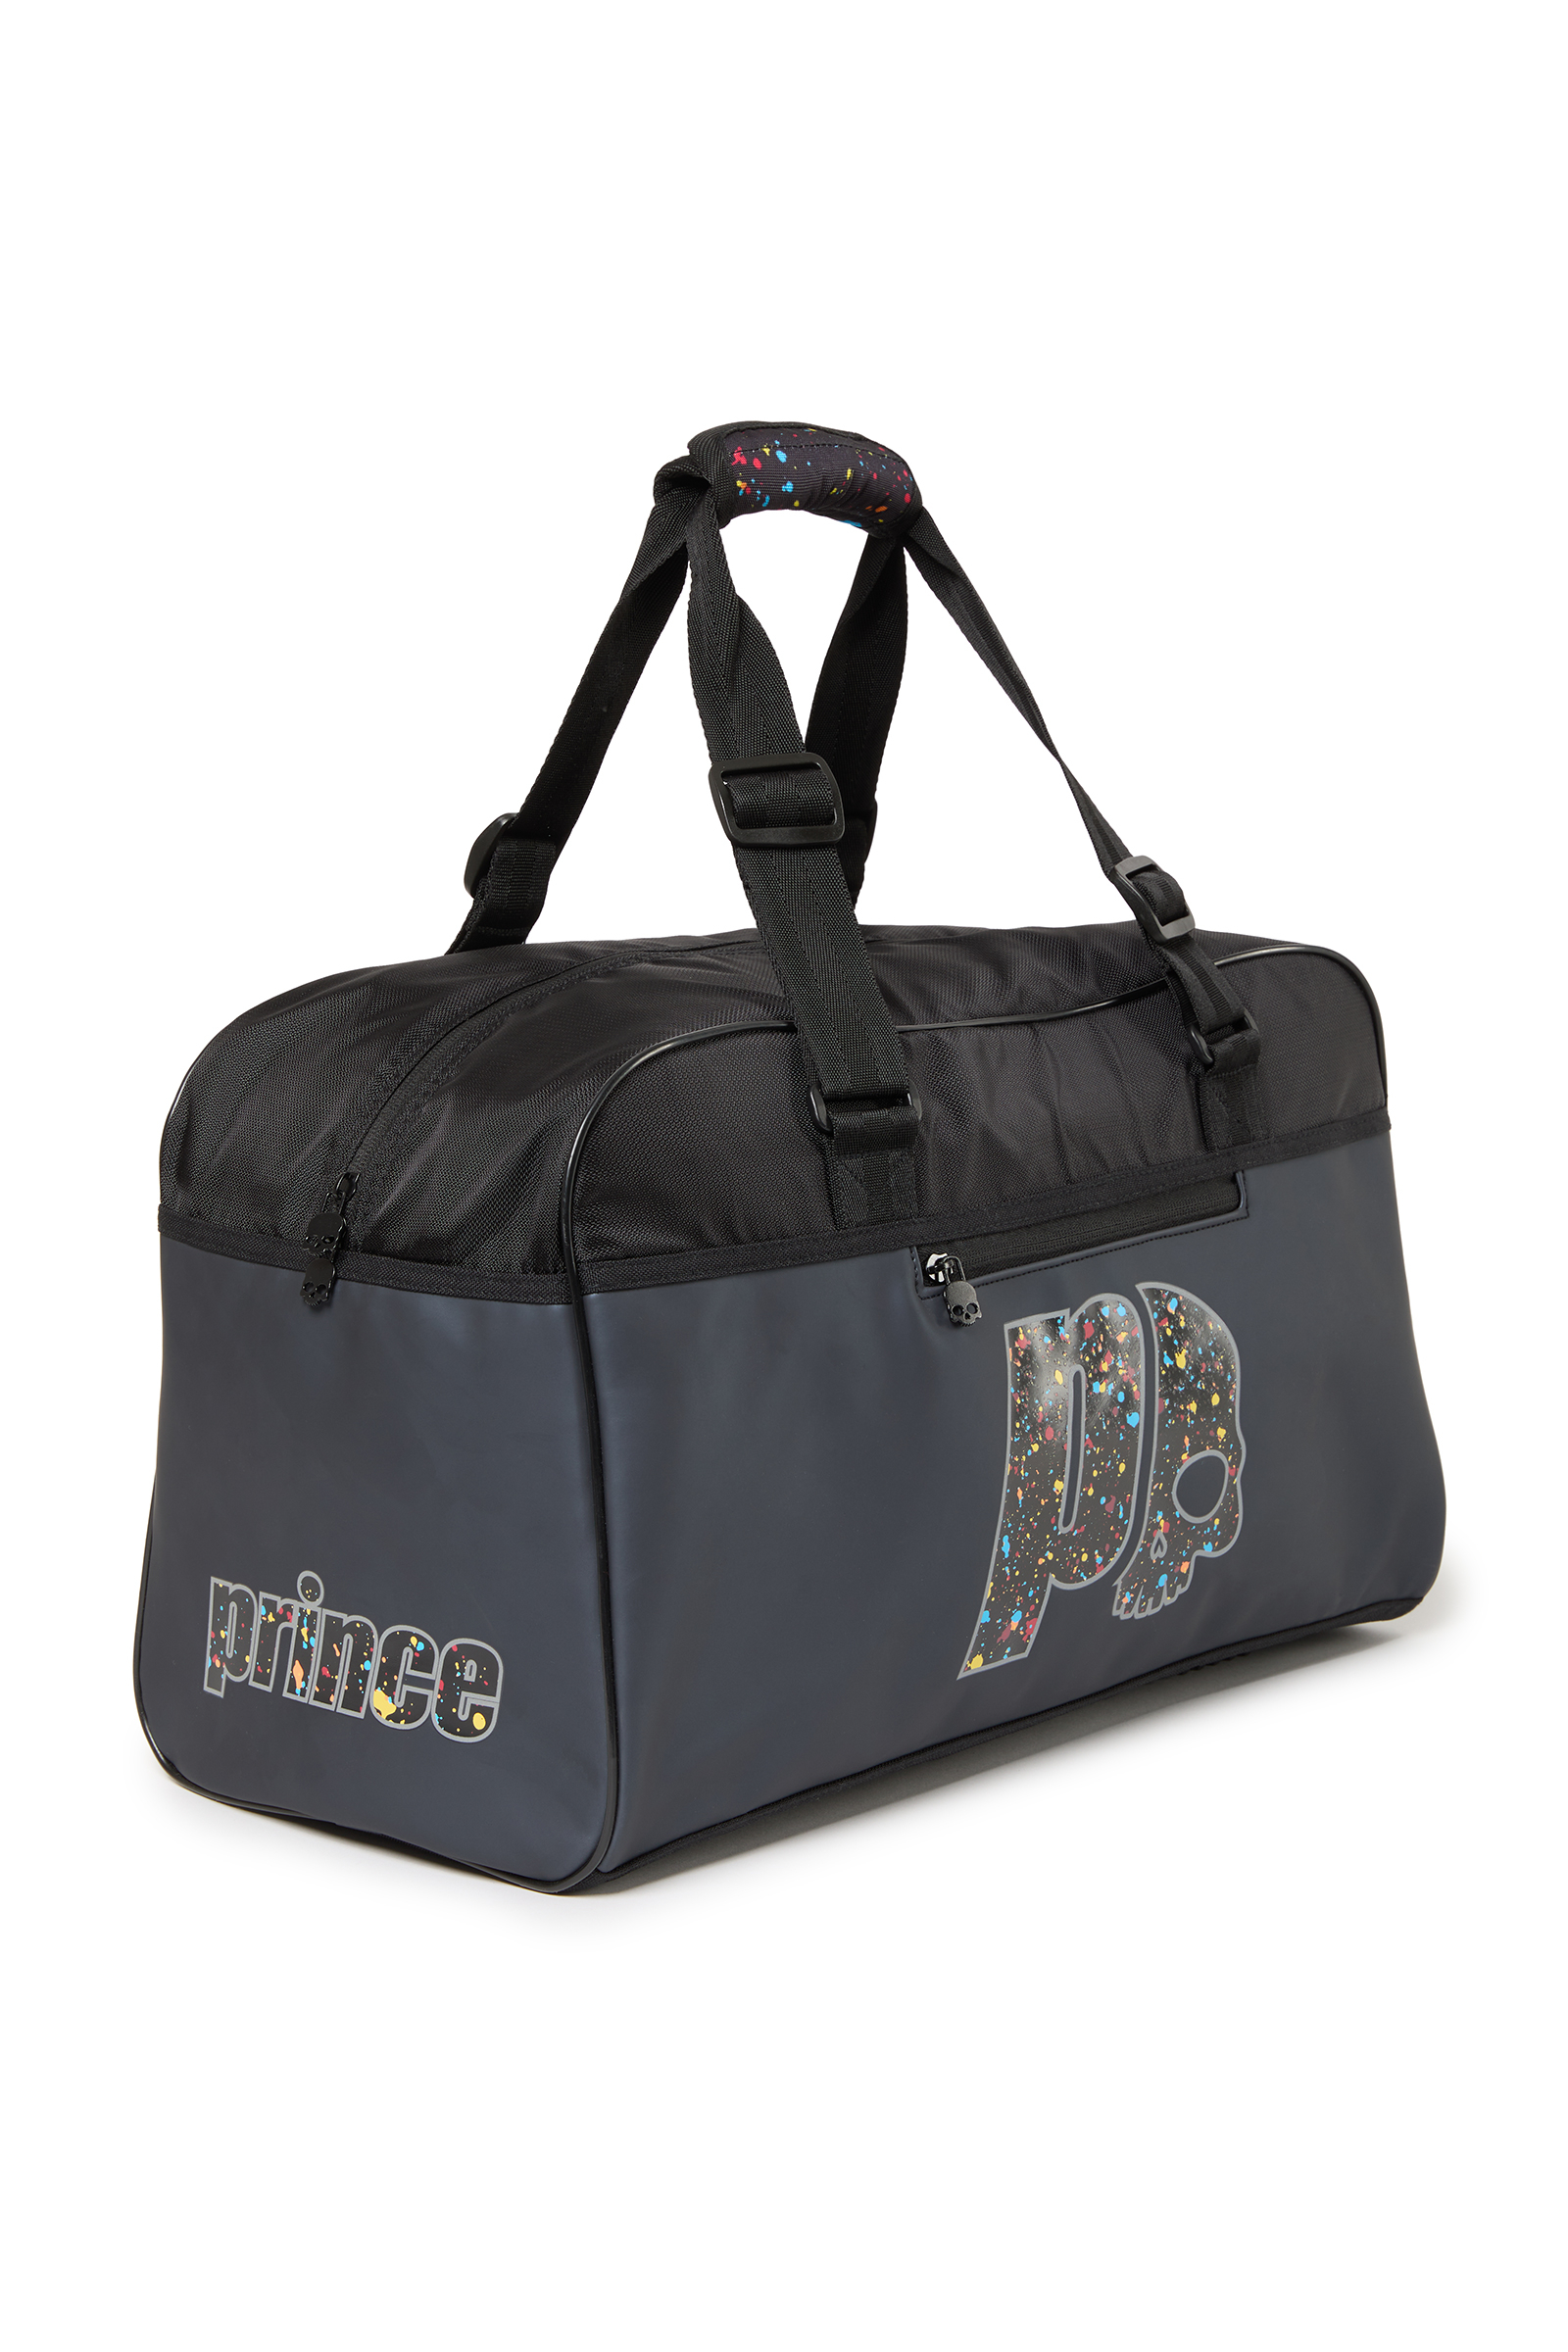 SPARK SMALL DUFFLE BAG PRINCE BY HYDROGEN - Black - Hydrogen - Luxury Sportwear